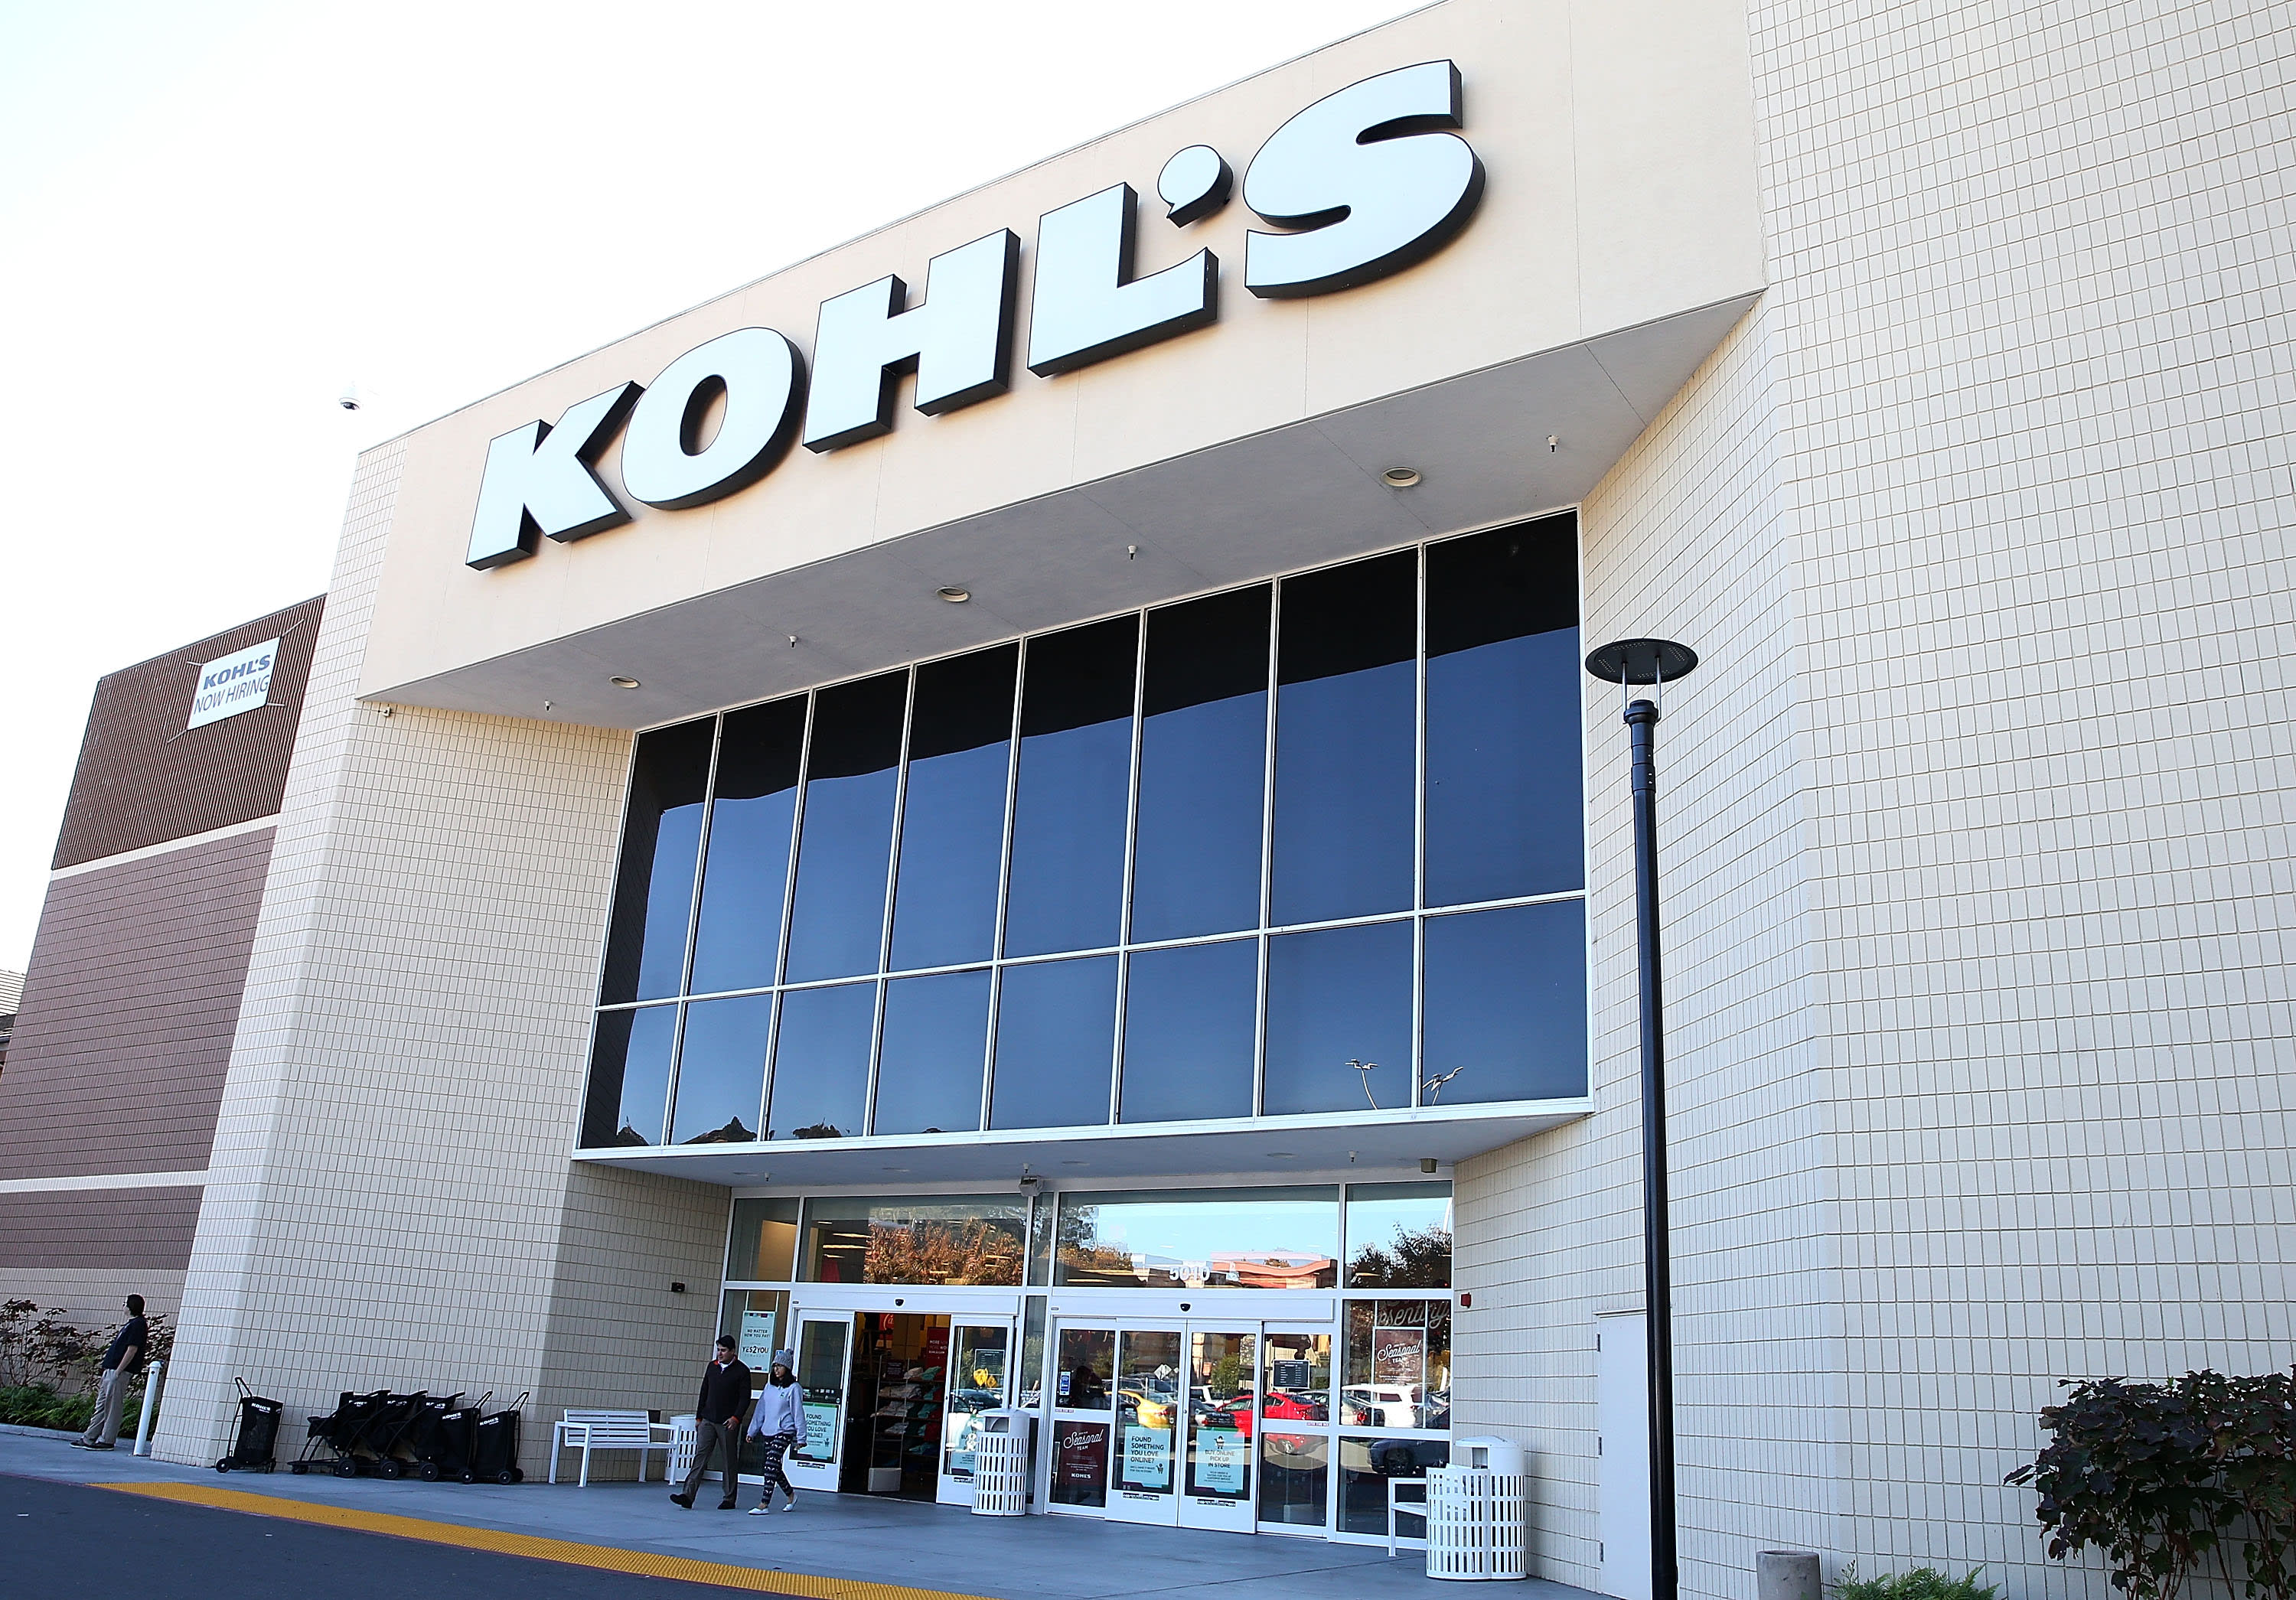 Kohl’s (KSS) earnings in the fourth quarter of 2020 exceeded